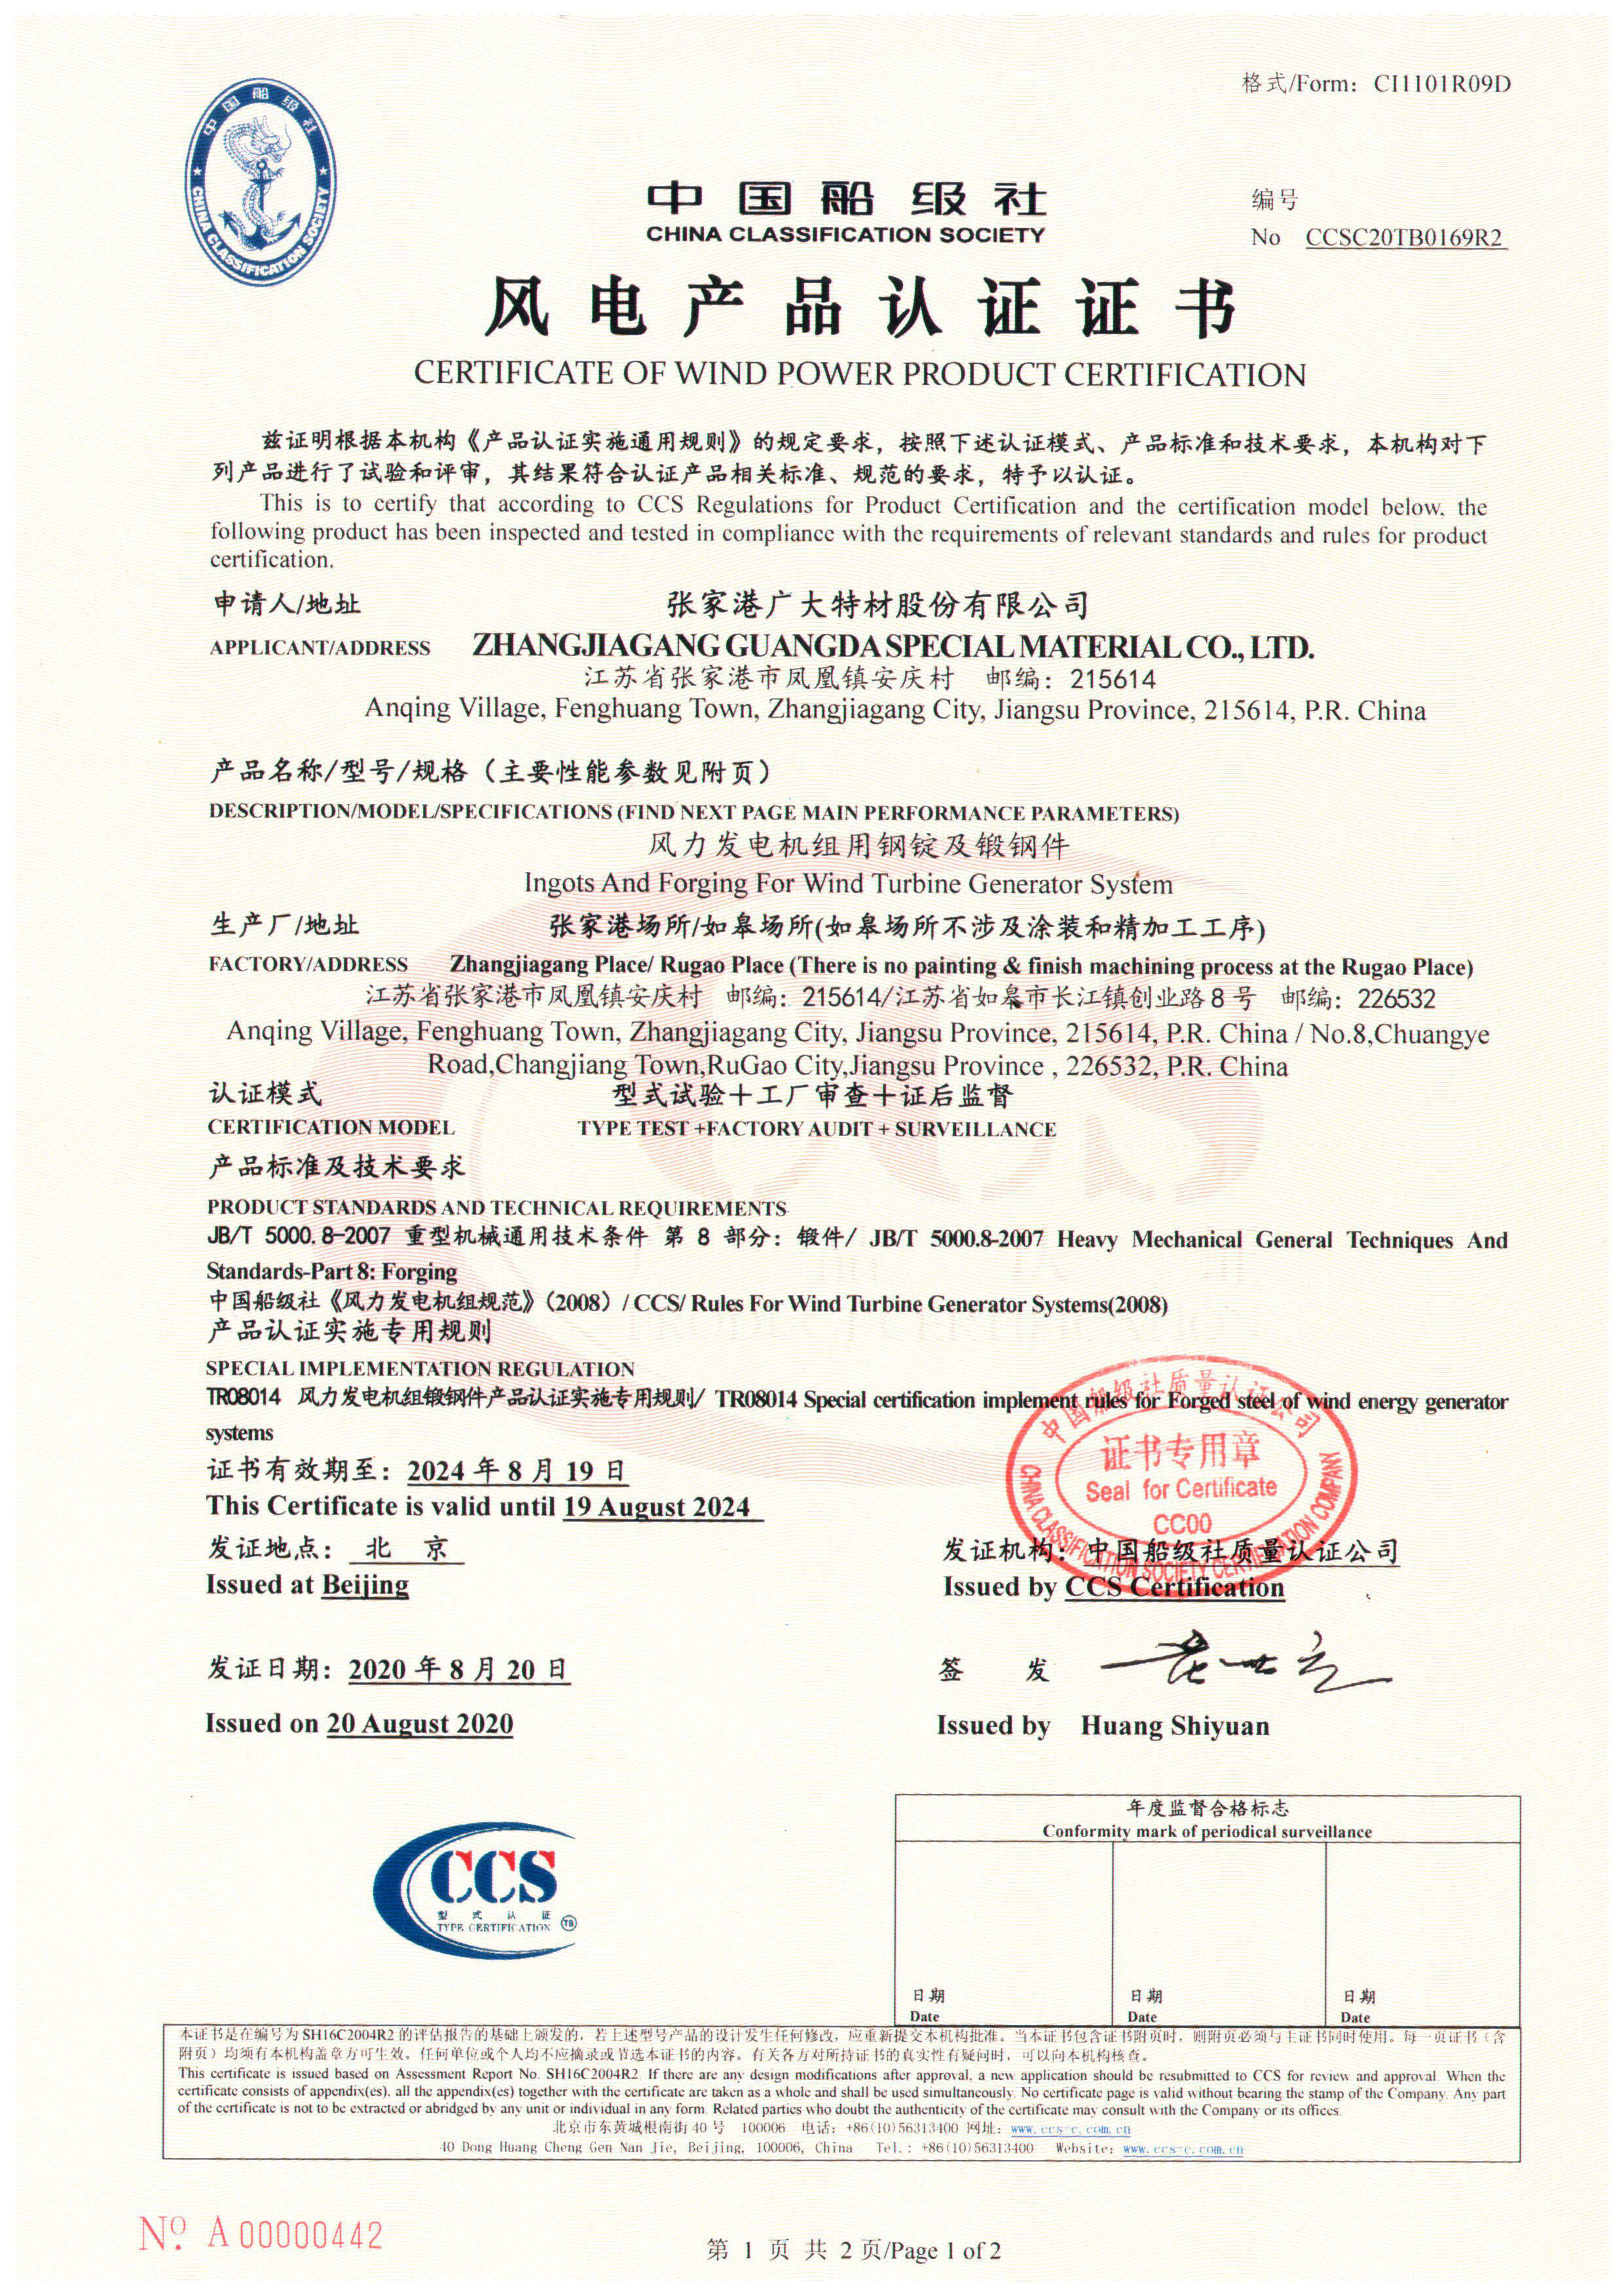 Zhangjiagang Guangda Special Material Co., Ltd. Certifications